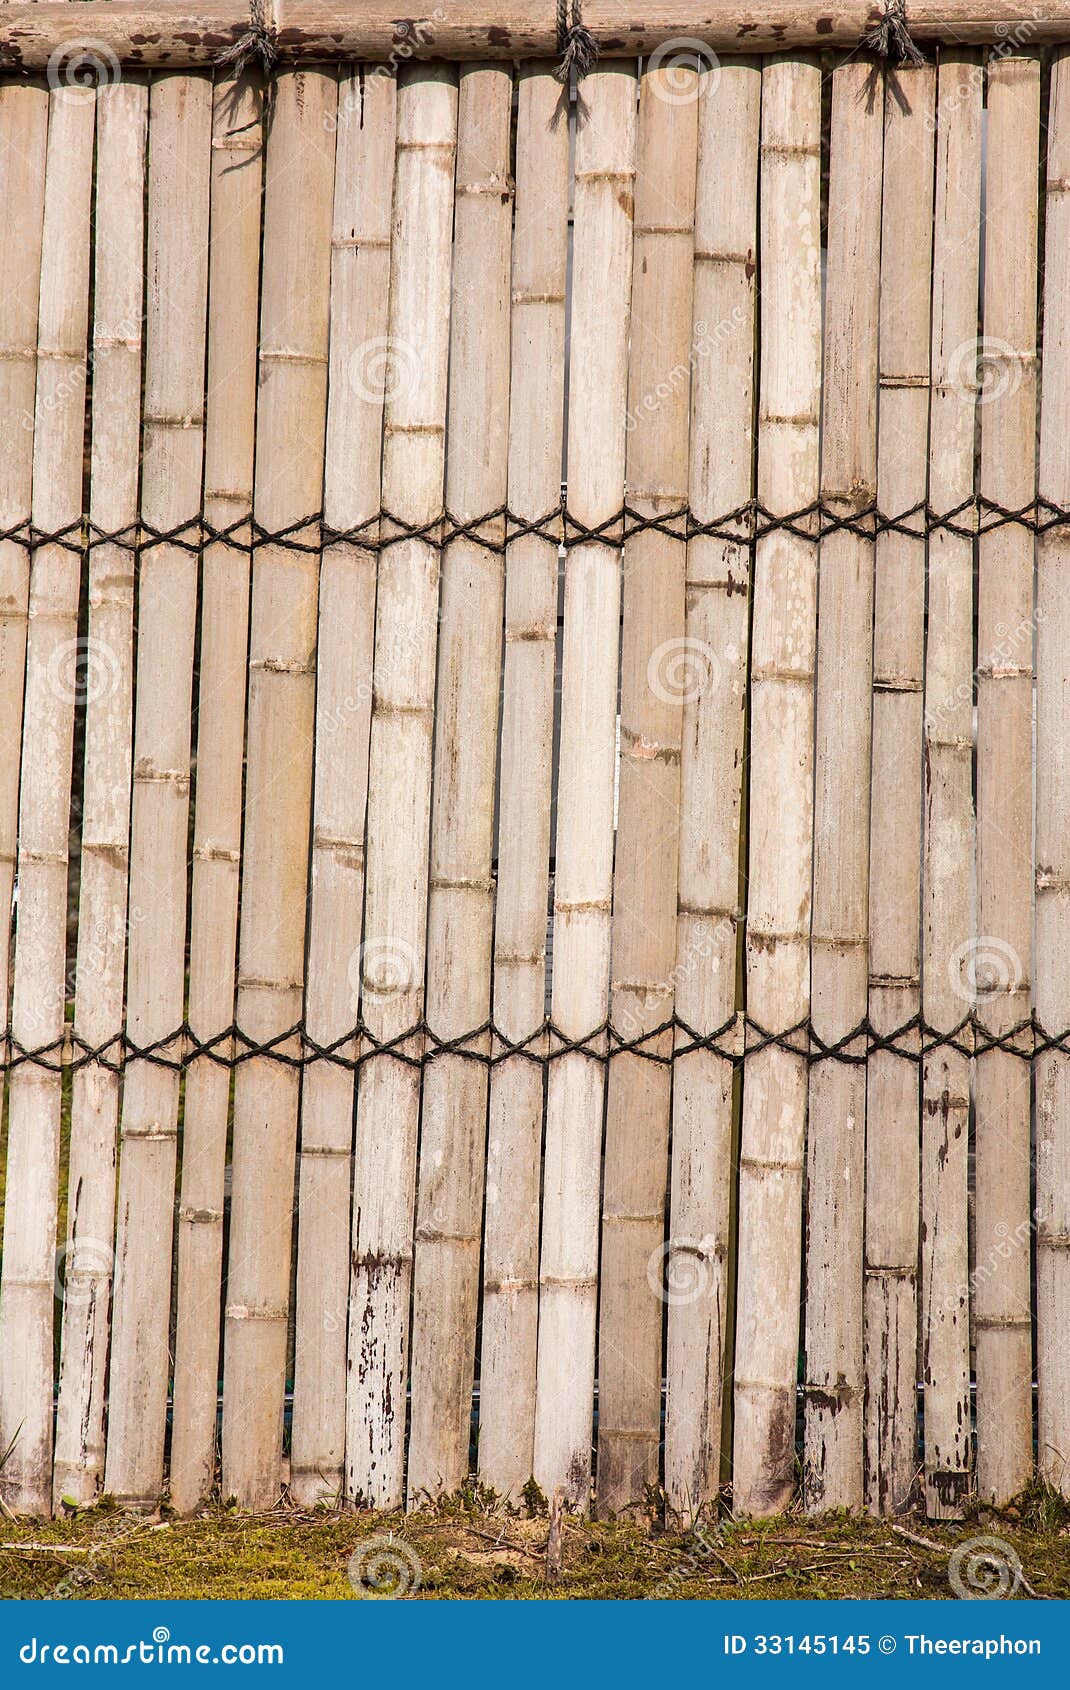 bamboo-walls-thai-style-house-wall-33145145.jpg